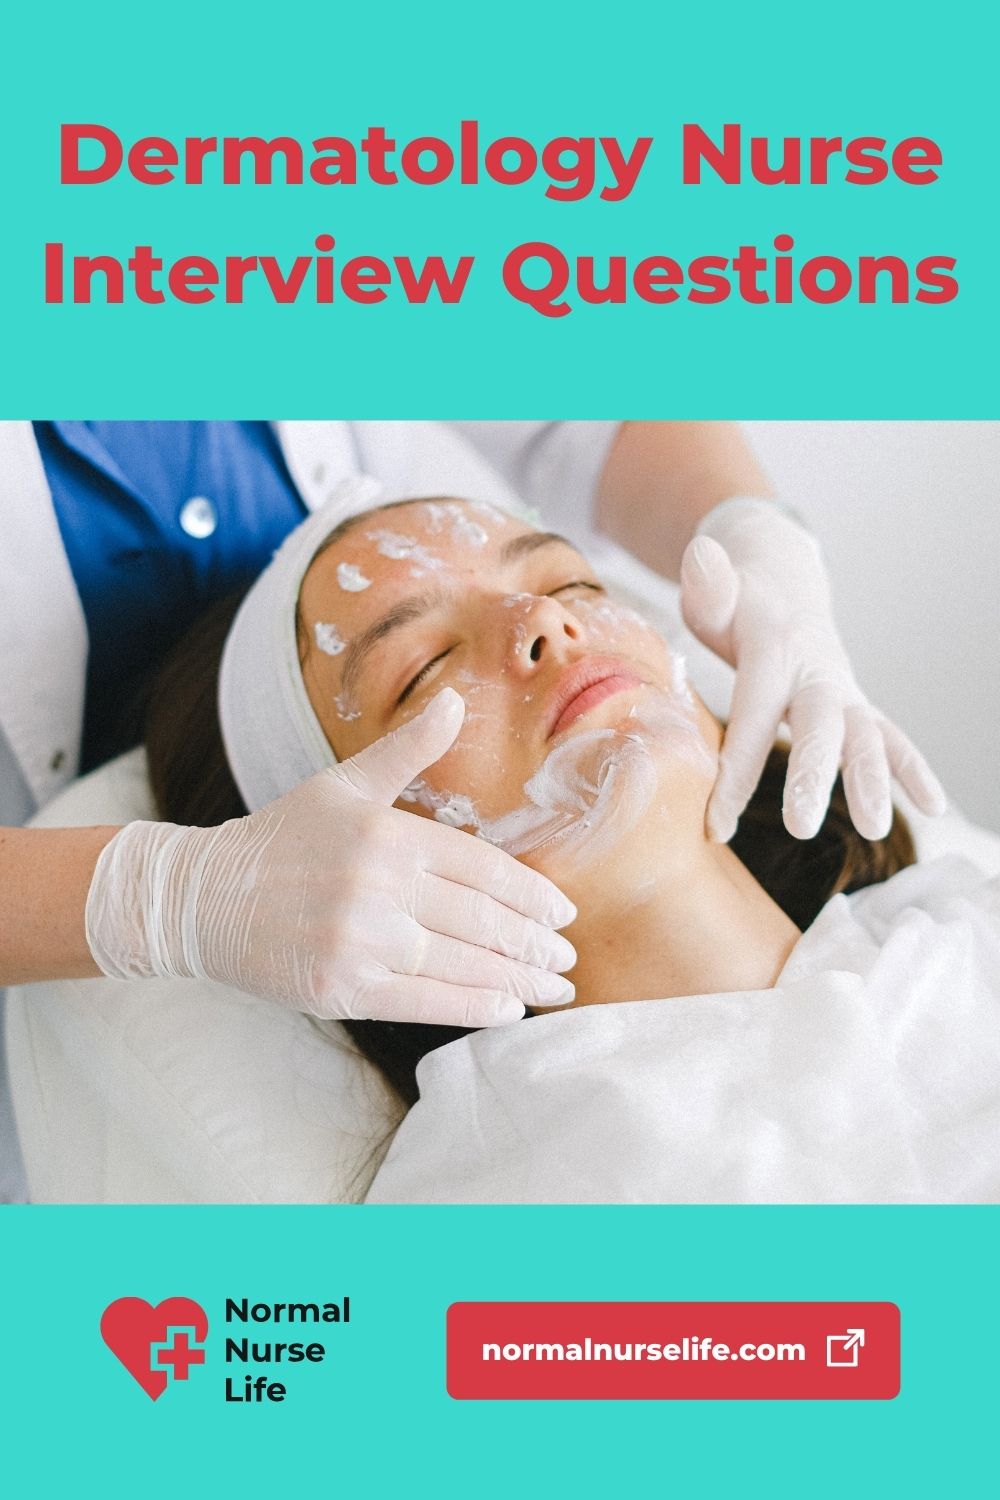 Interview questions for dermatology nurses